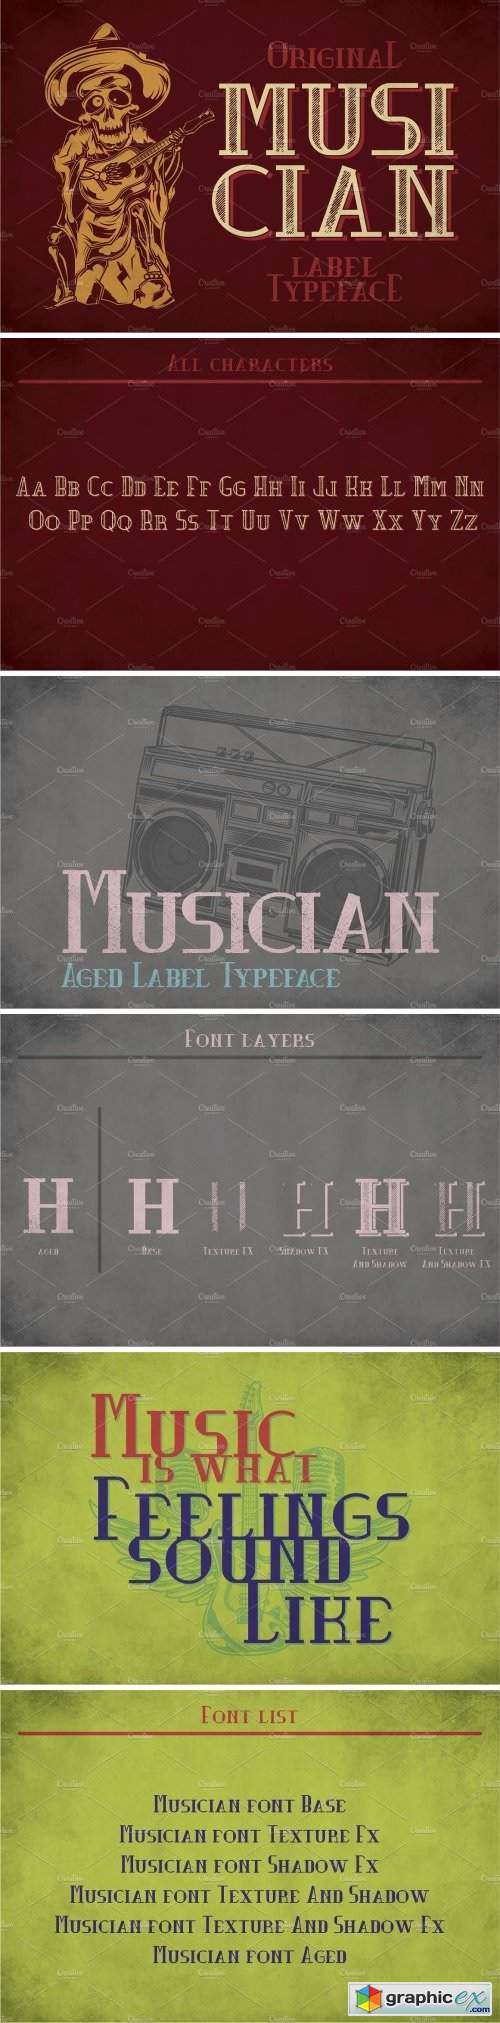 Musician Modern Label Typeface